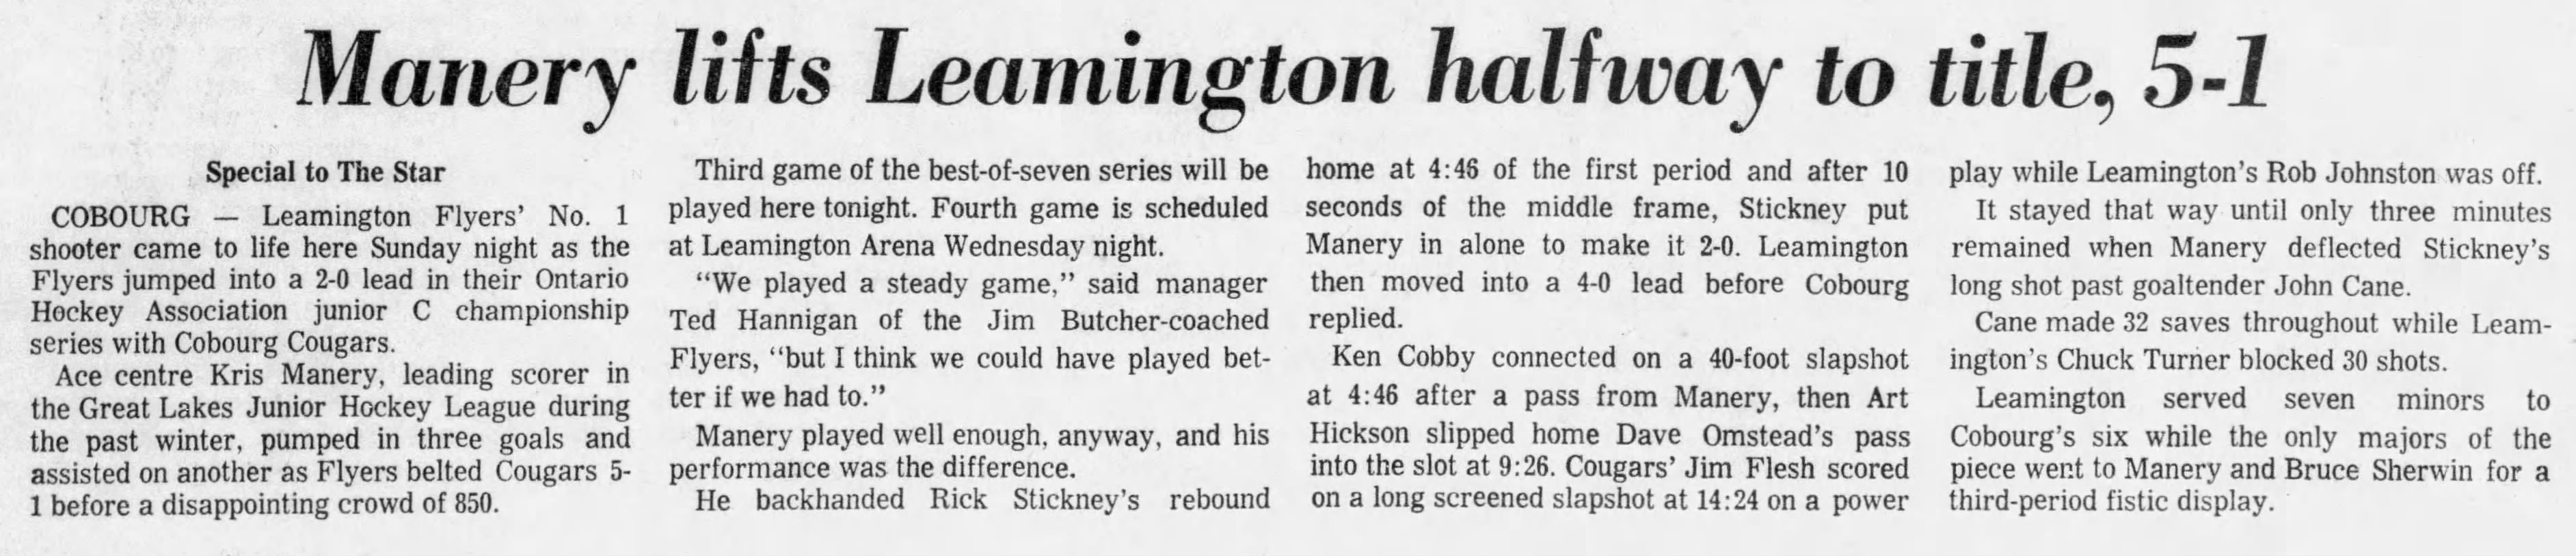 1972-04-17 Hockey -Cougars JrC Game2 loss to Leamingtom -Windsor Star